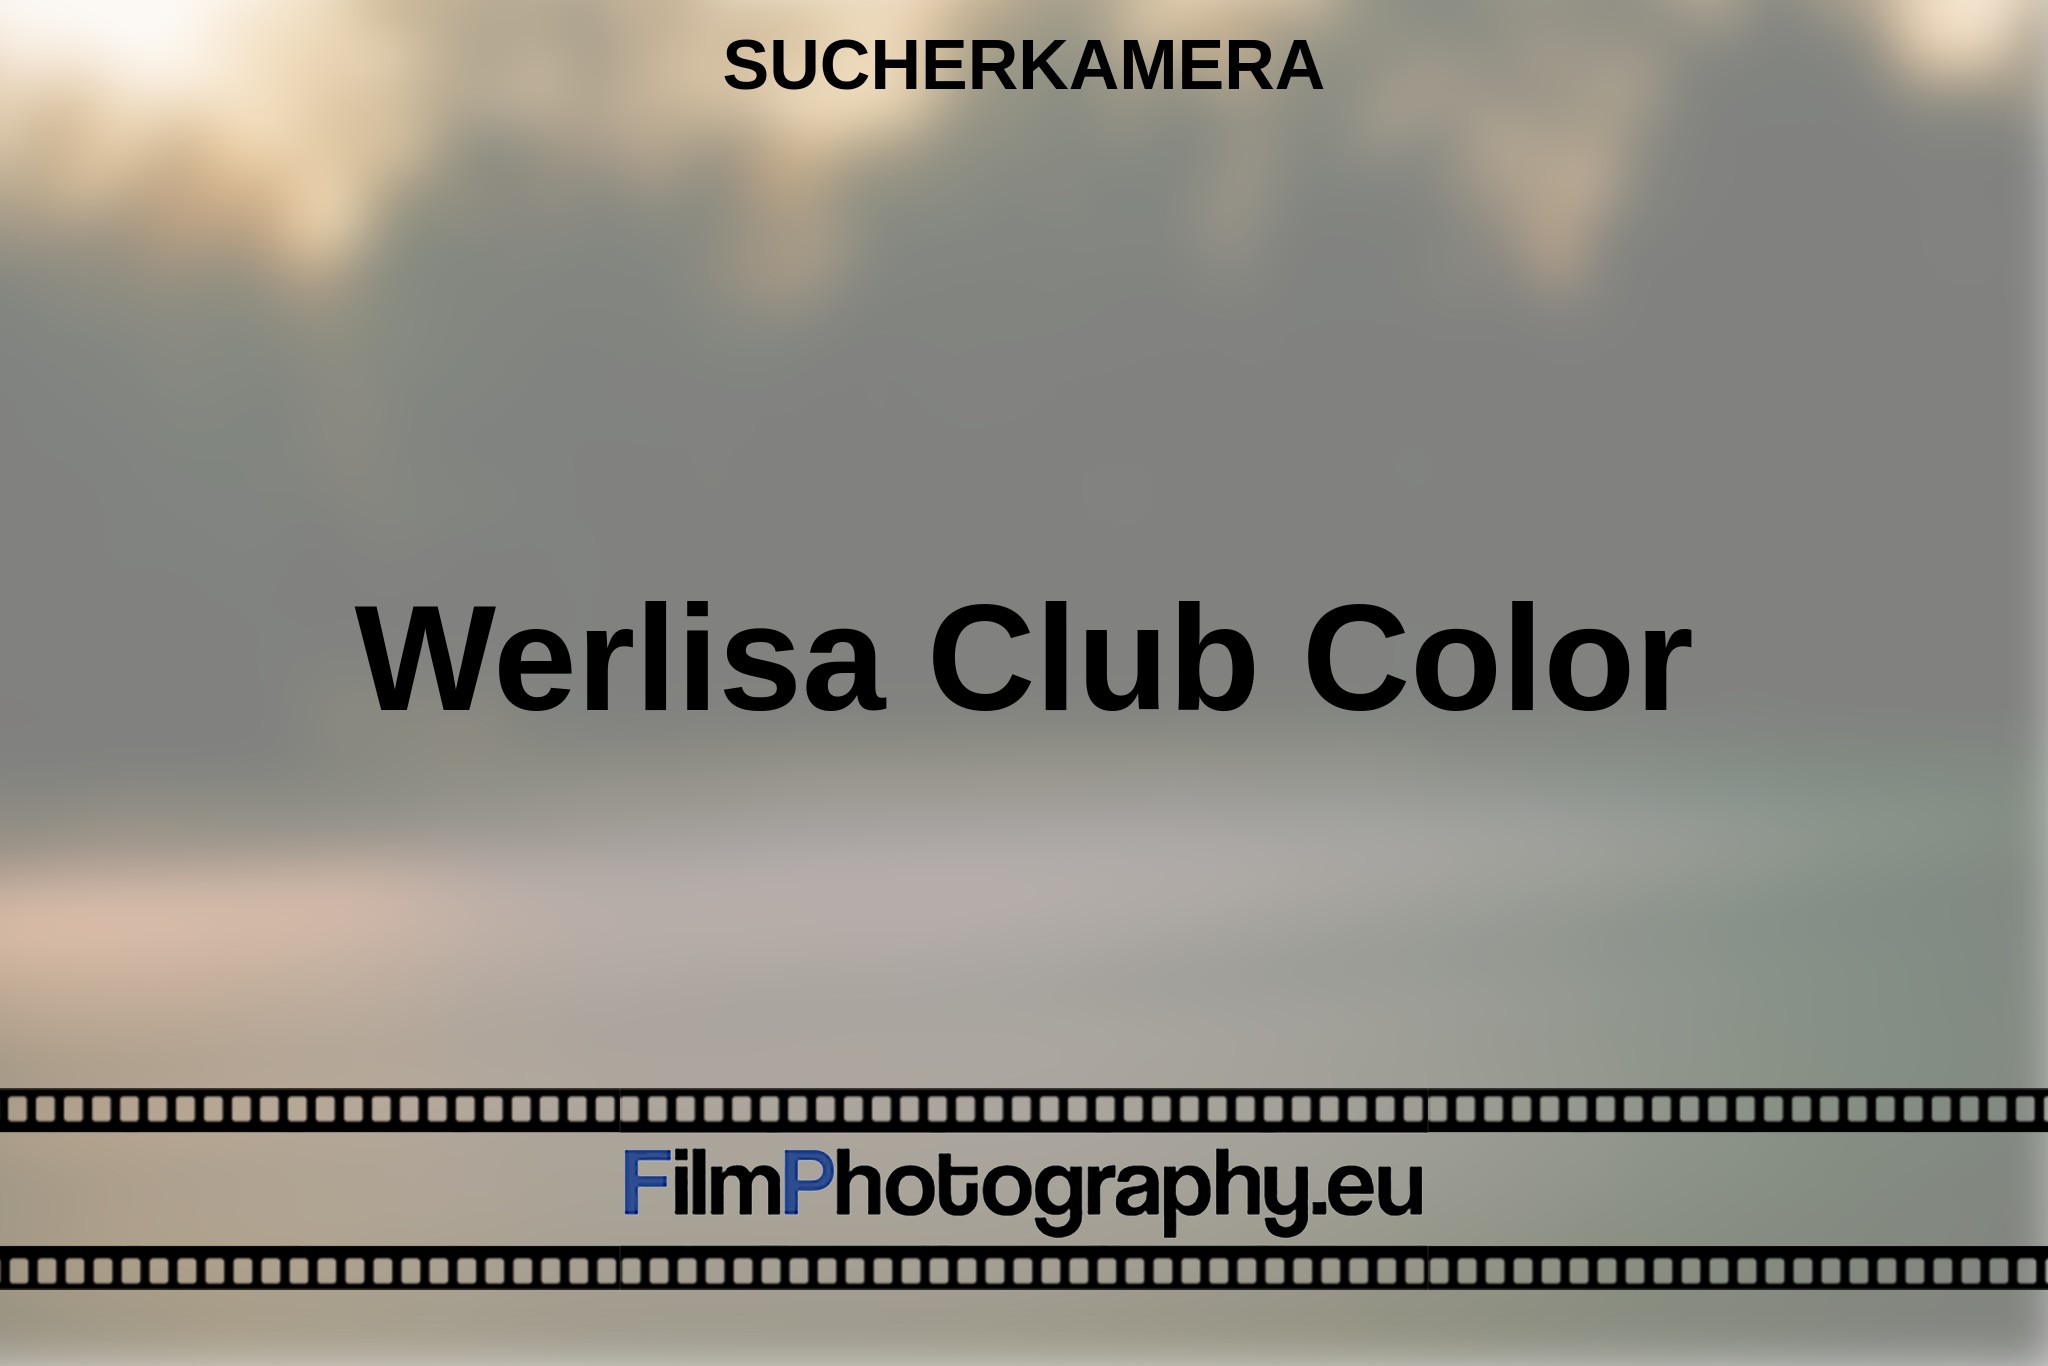 werlisa-club-color-sucherkamera-bnv.jpg